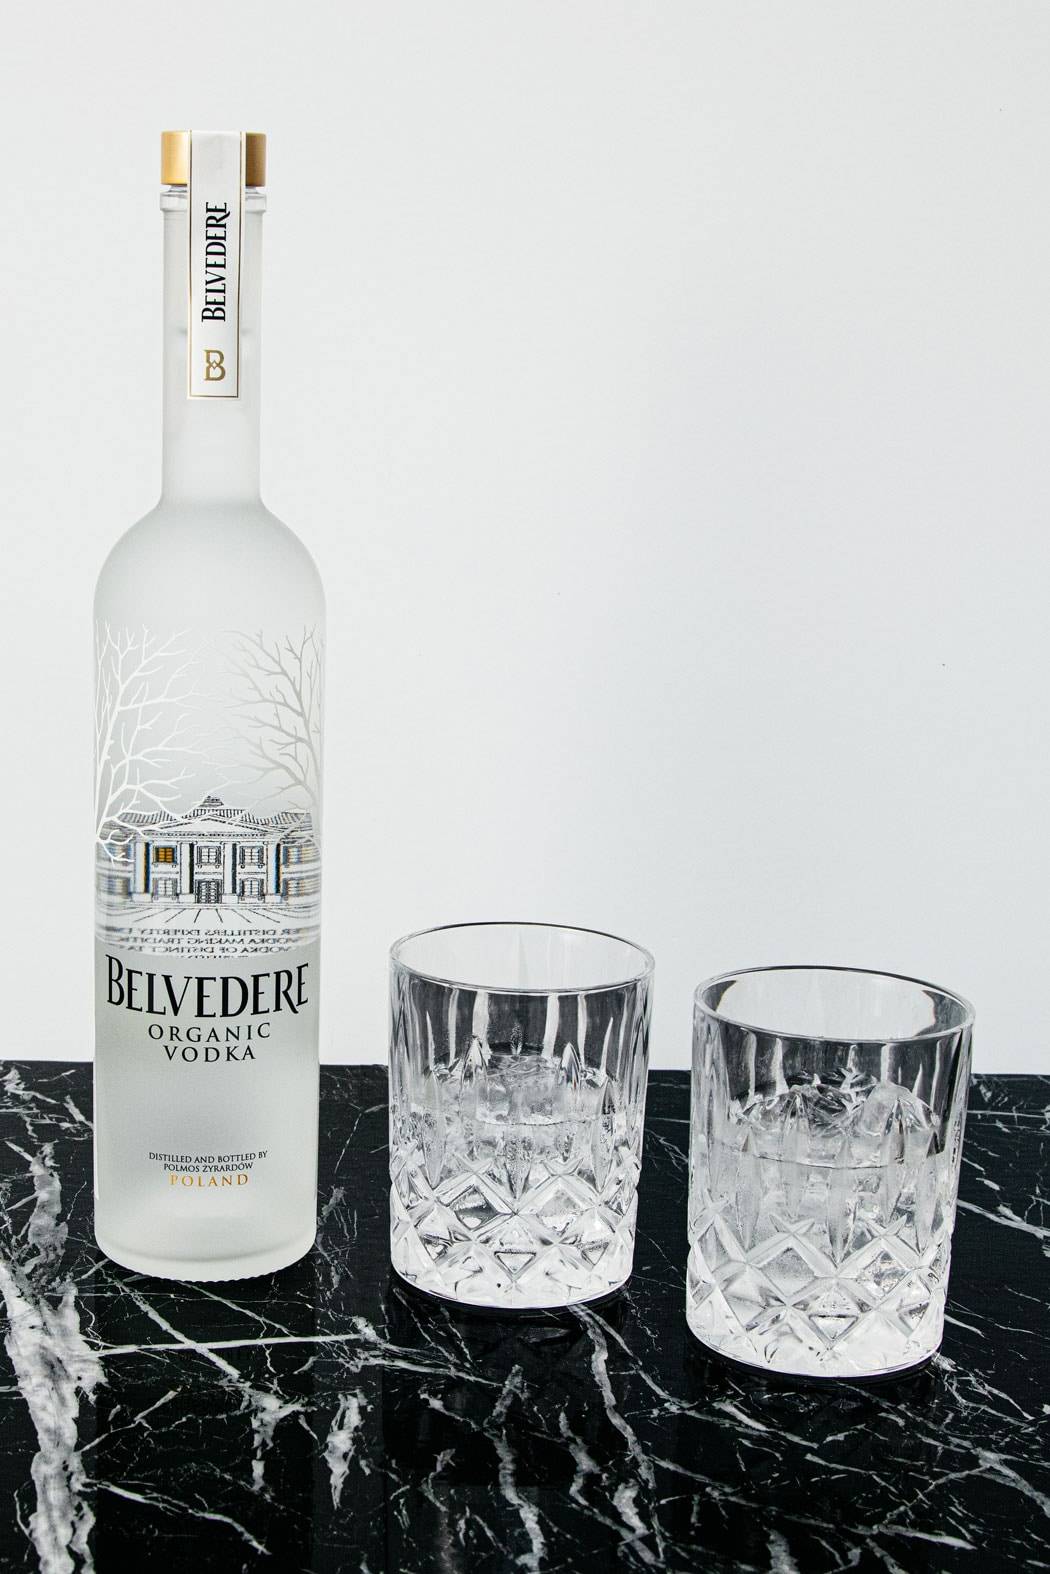 Belvedere organic vodka bottle